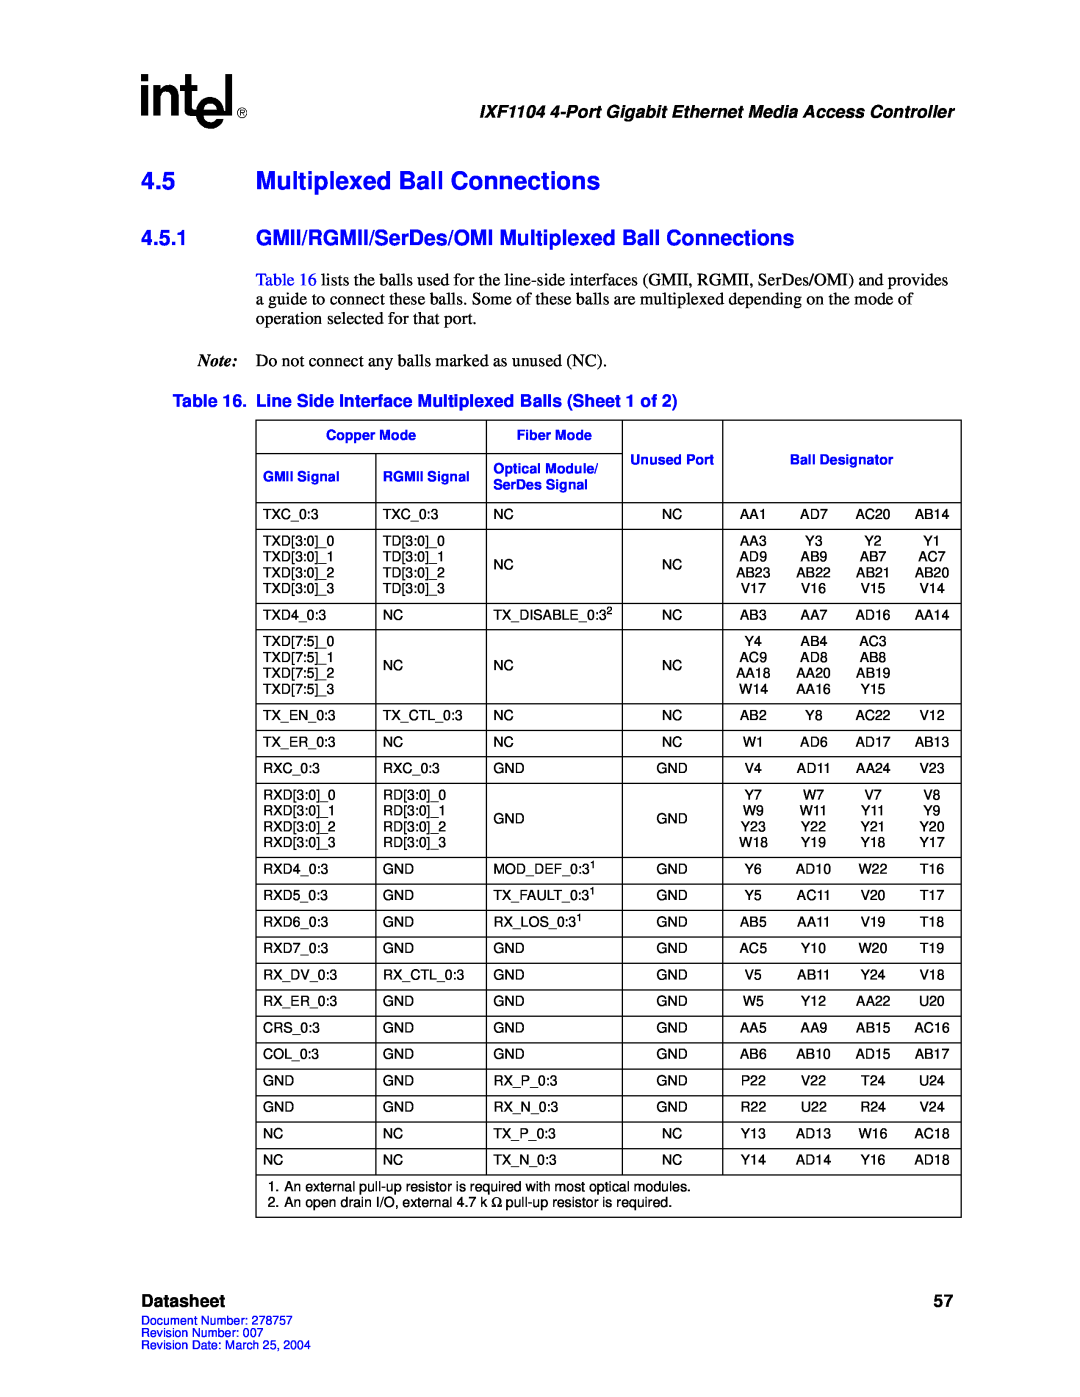 Intel IXF1104 manual 4.5Multiplexed Ball Connections, Datasheet 